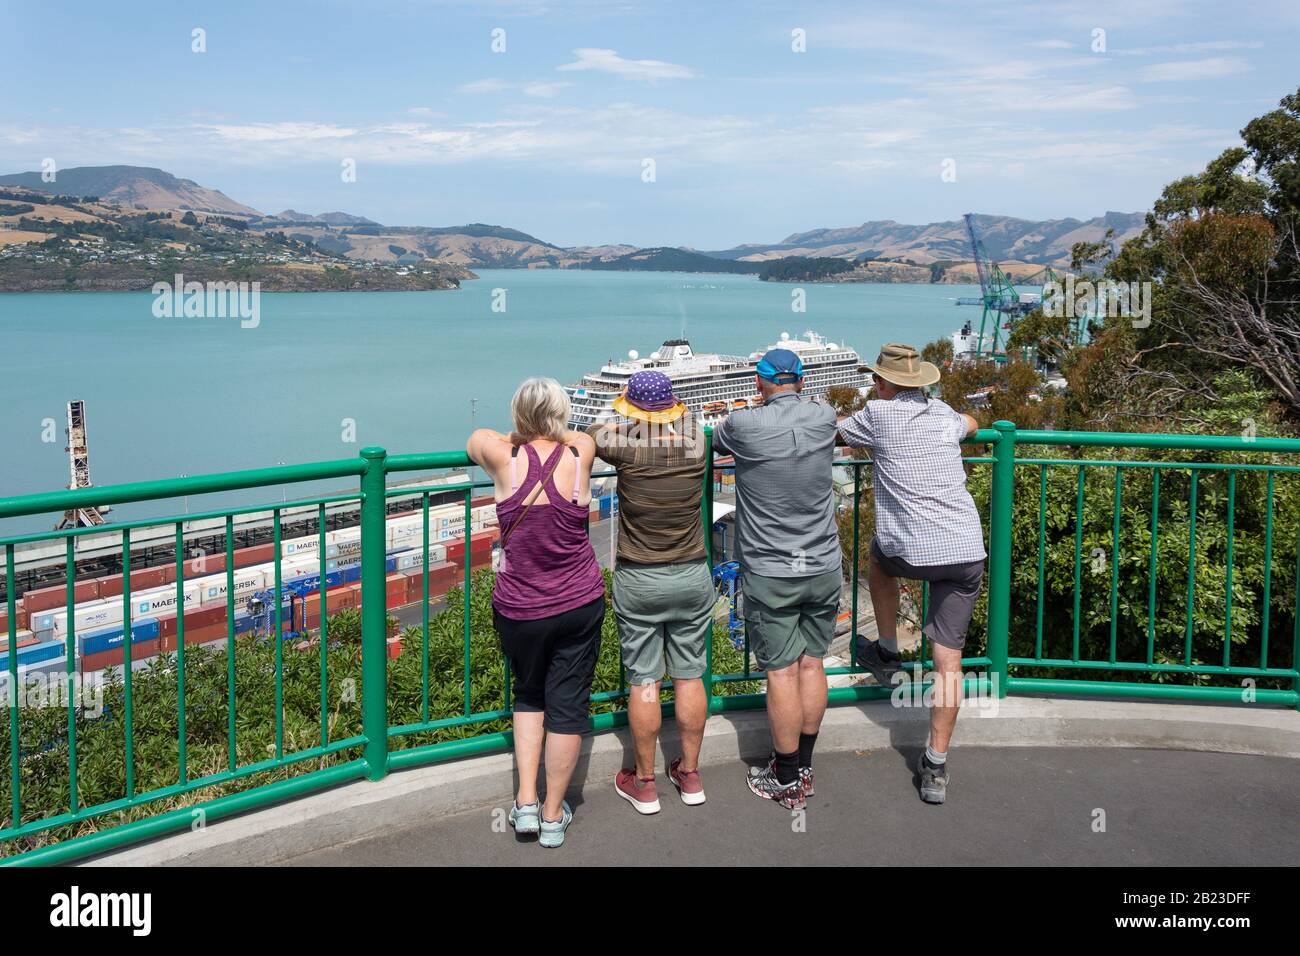 Group at lookout for Lyttelton Harbour, Lyttelton, Banks Peninsula, Canterbury Region, New Zealand Stock Photo